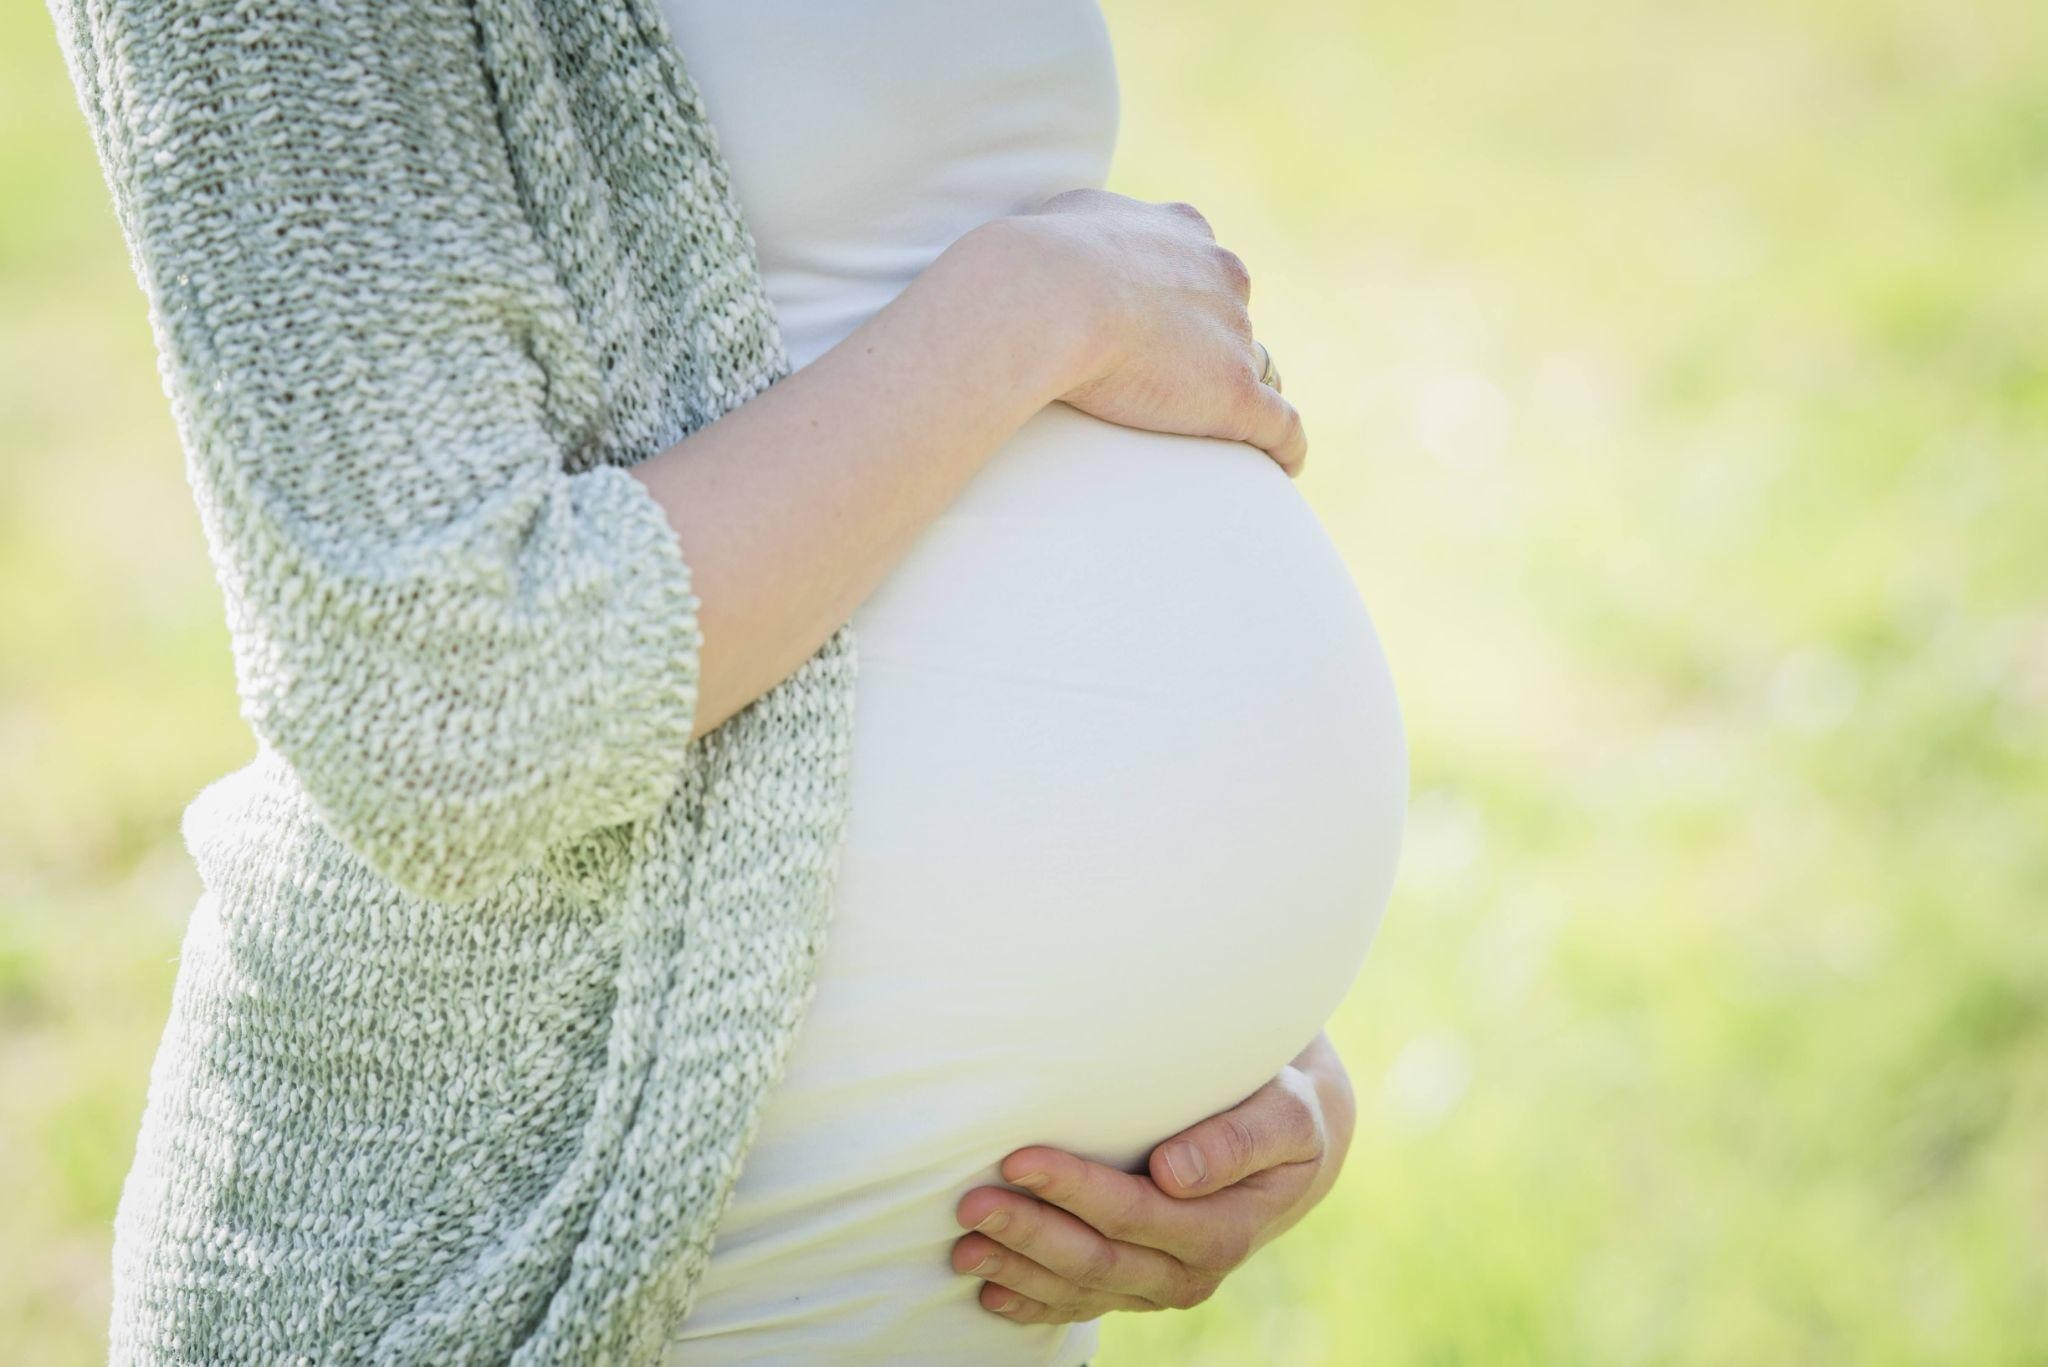 NUS Medicine Pregnancy News